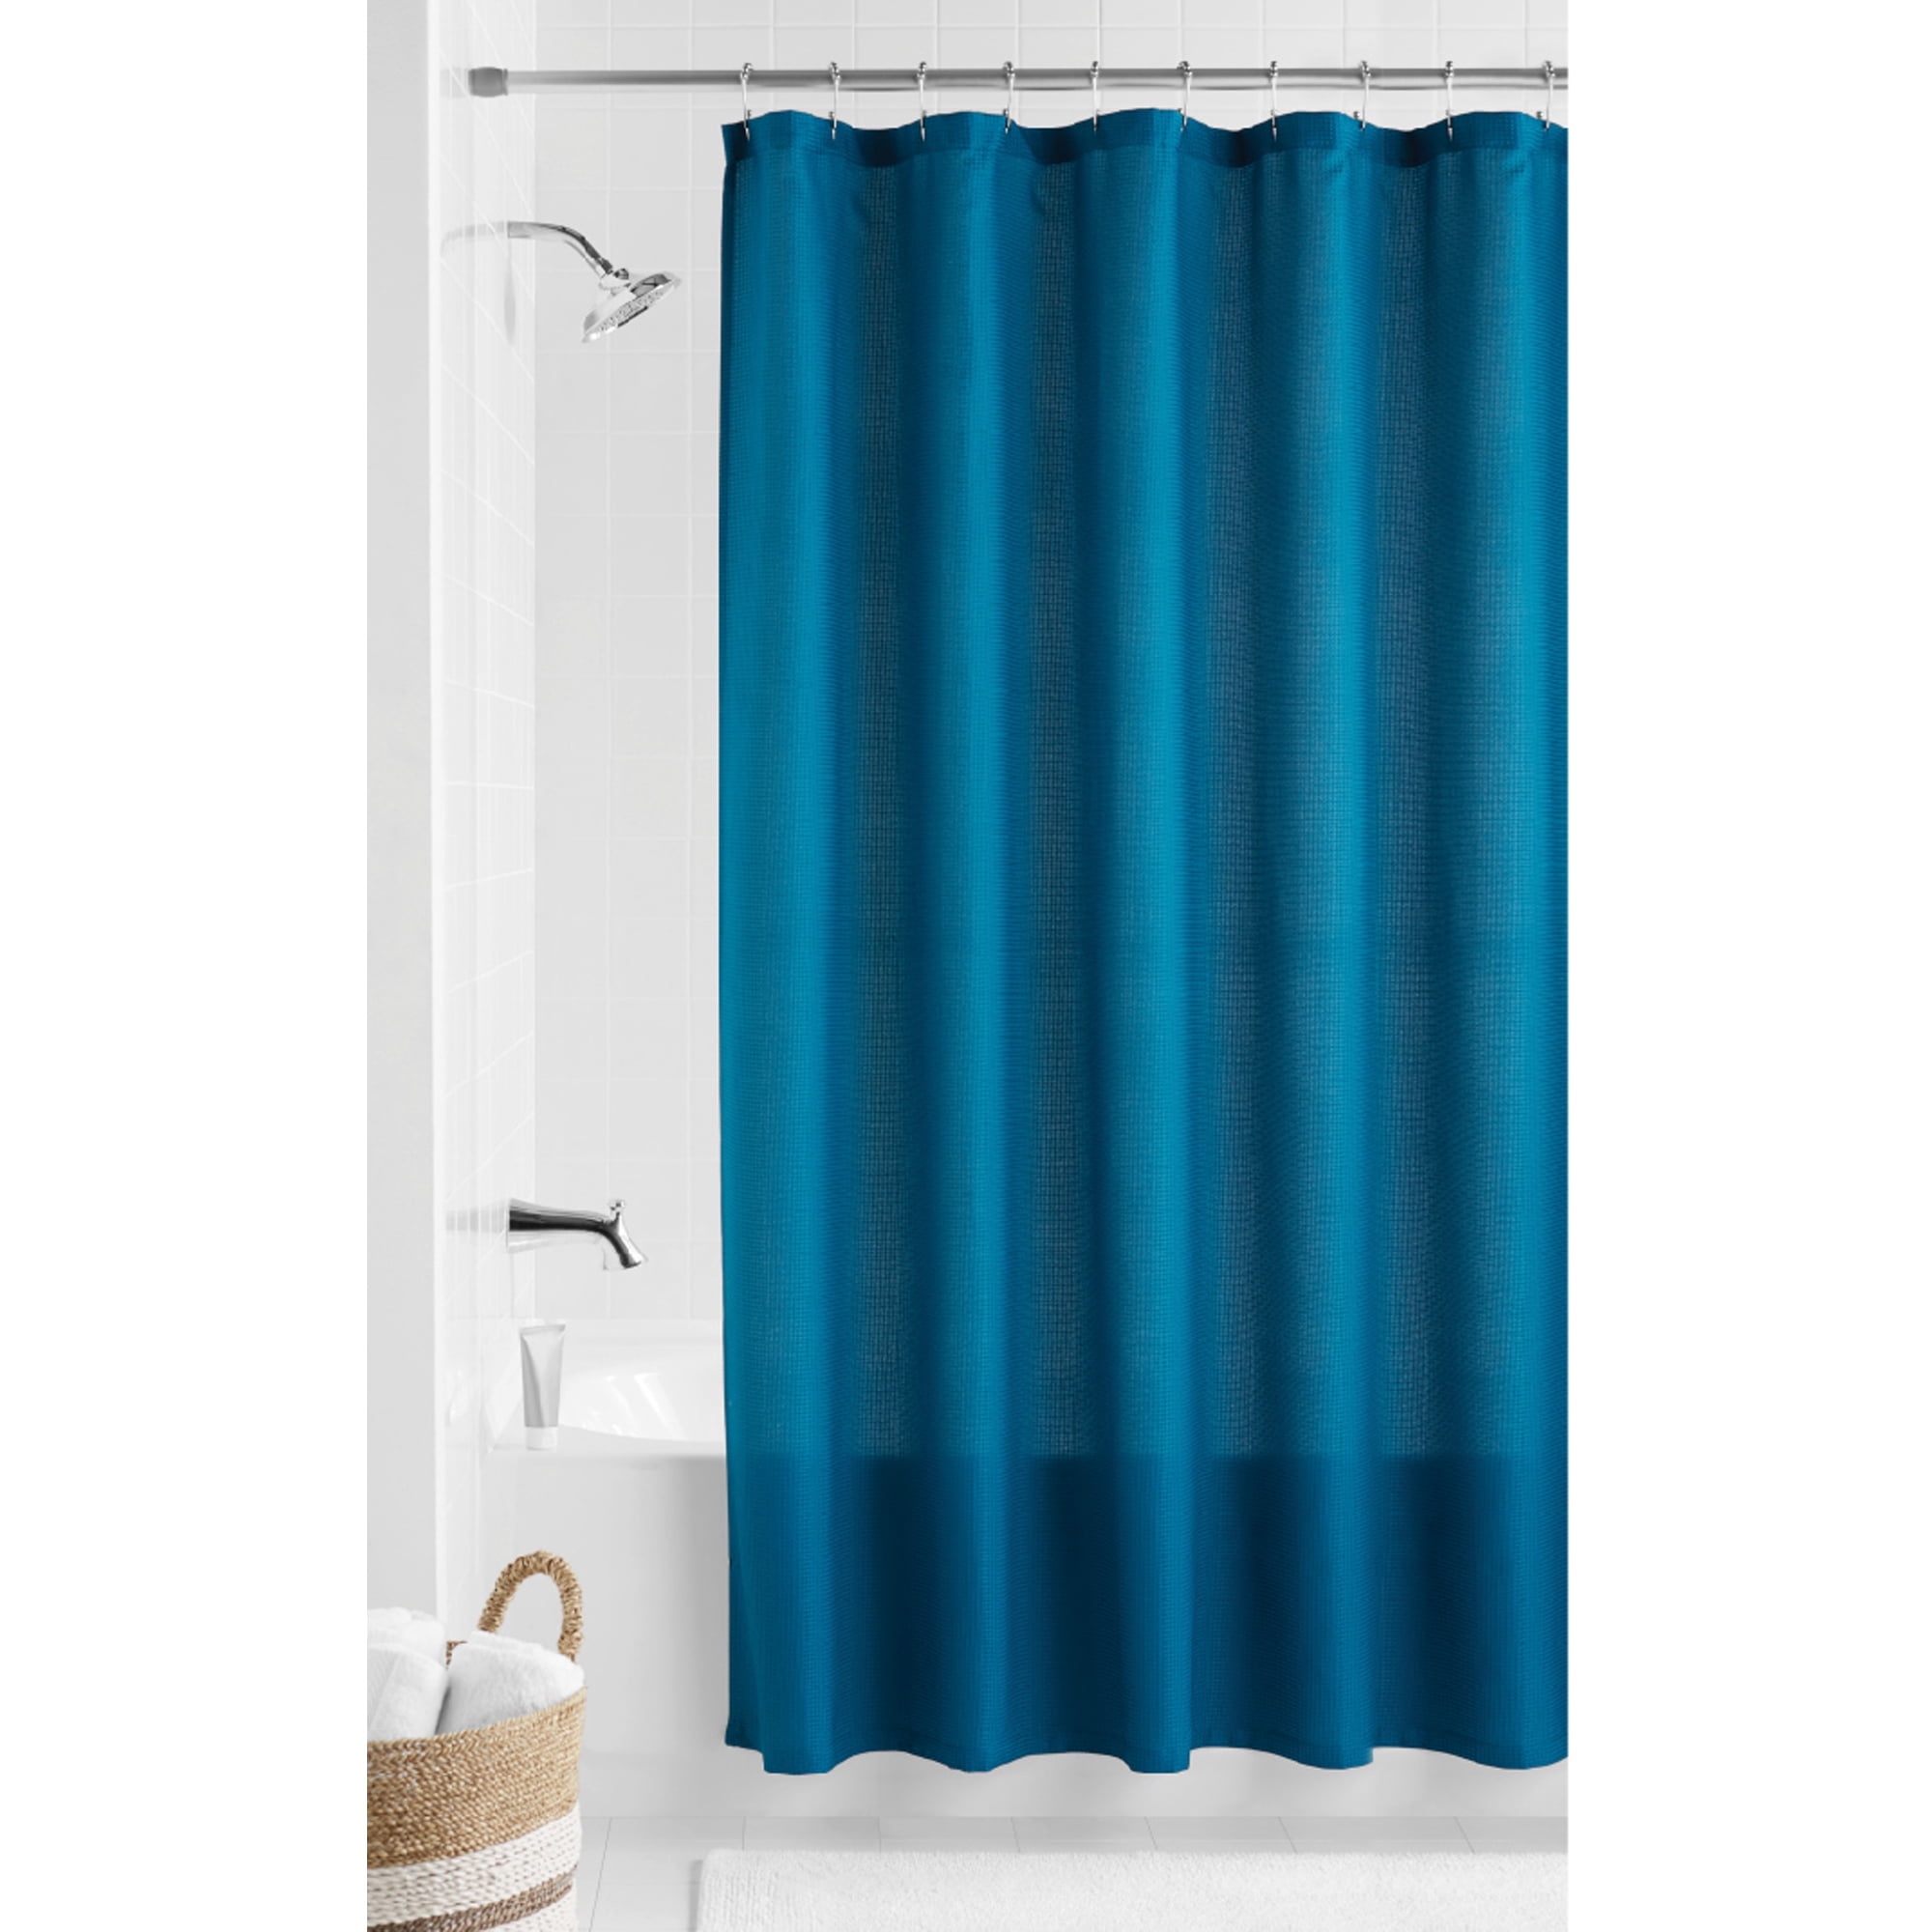 Aqua Mainstays Waffle Fabric Shower Curtain Collection Purple Terracotta 70x72